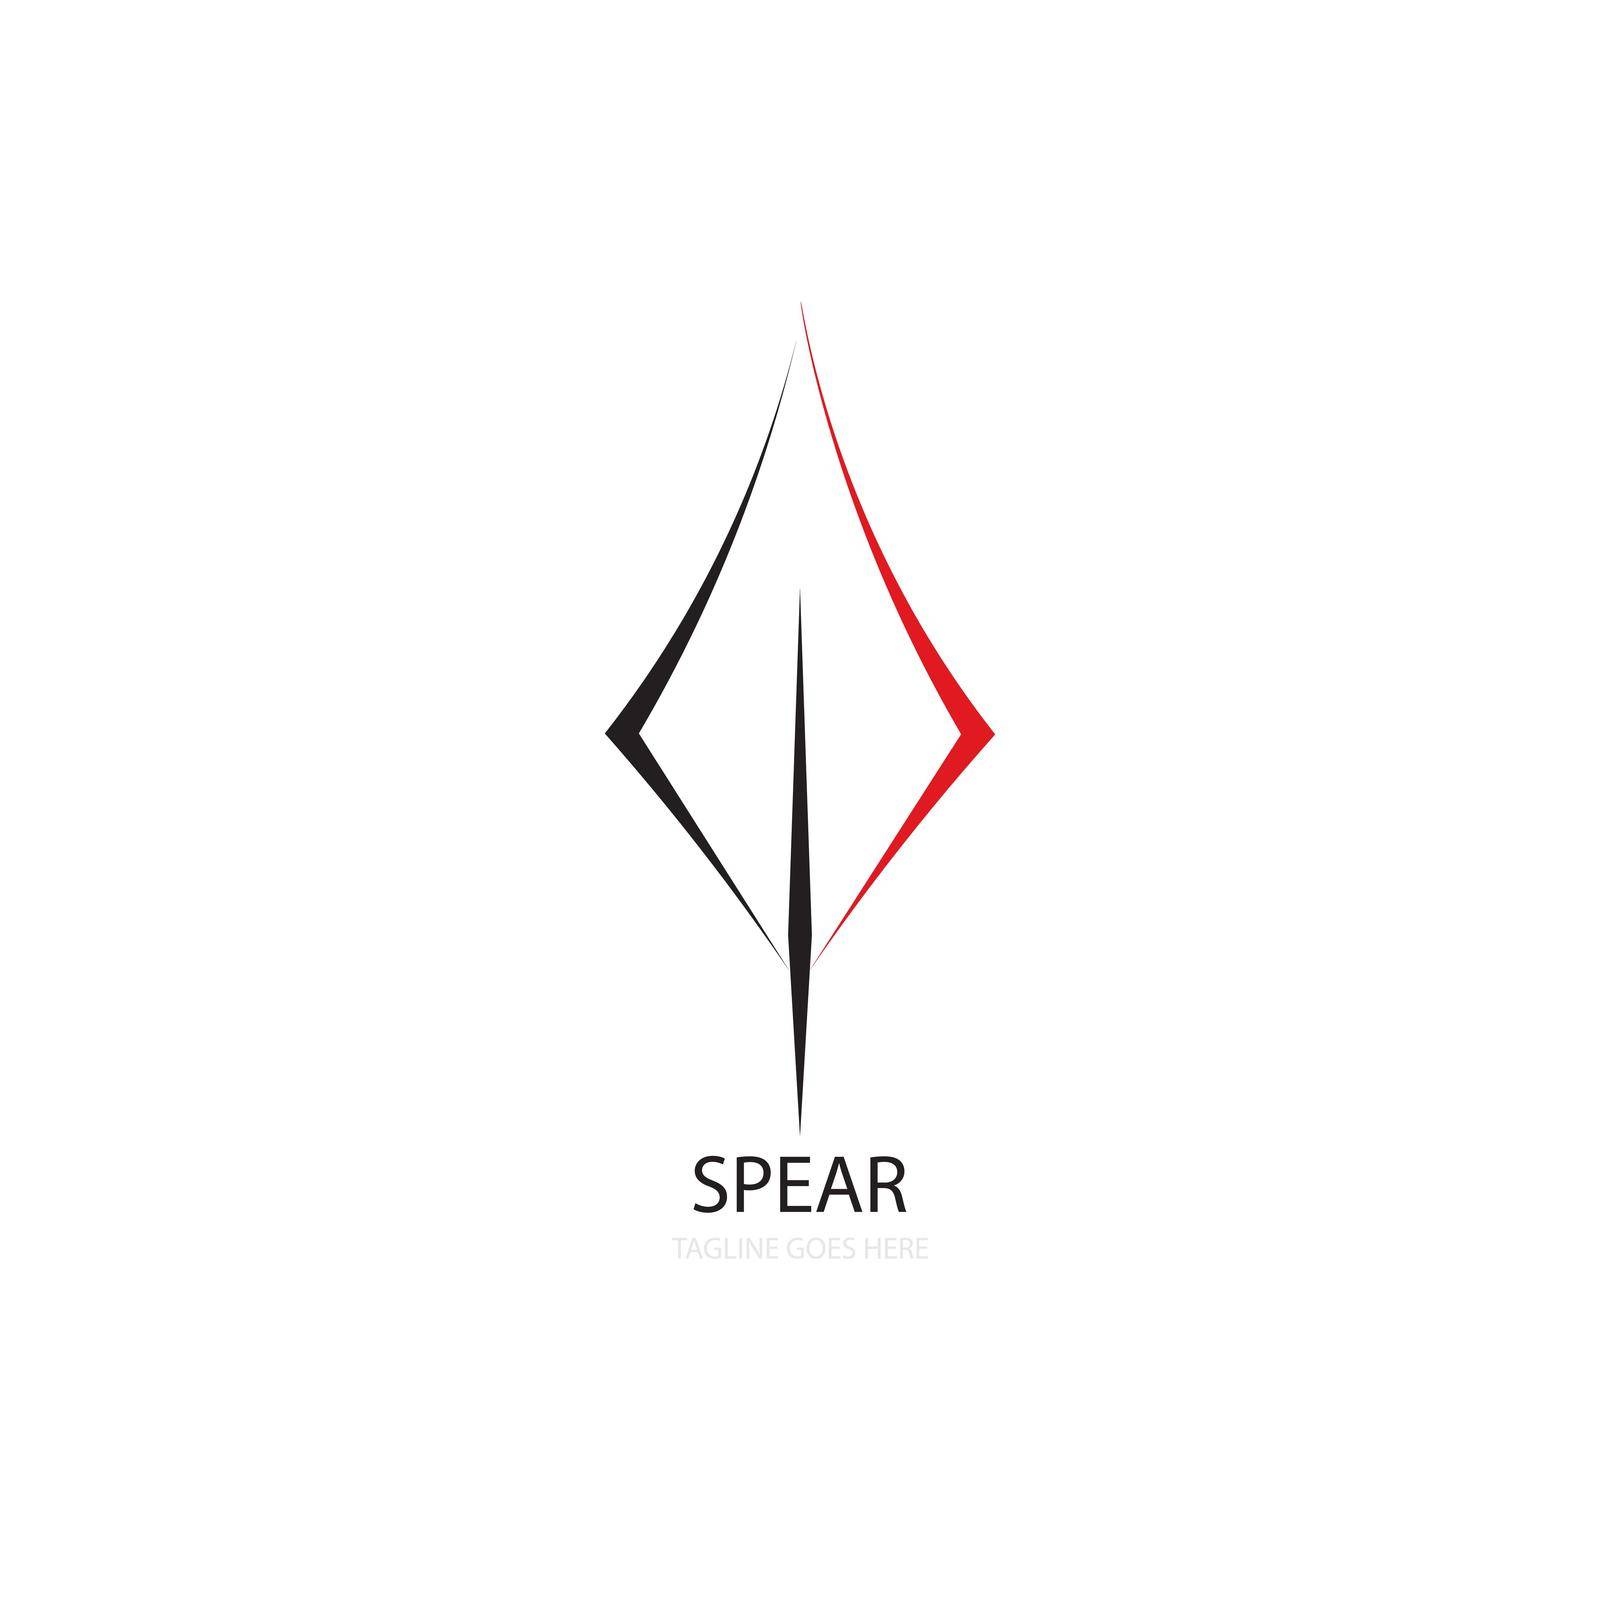 Spear icon logo free vector design
